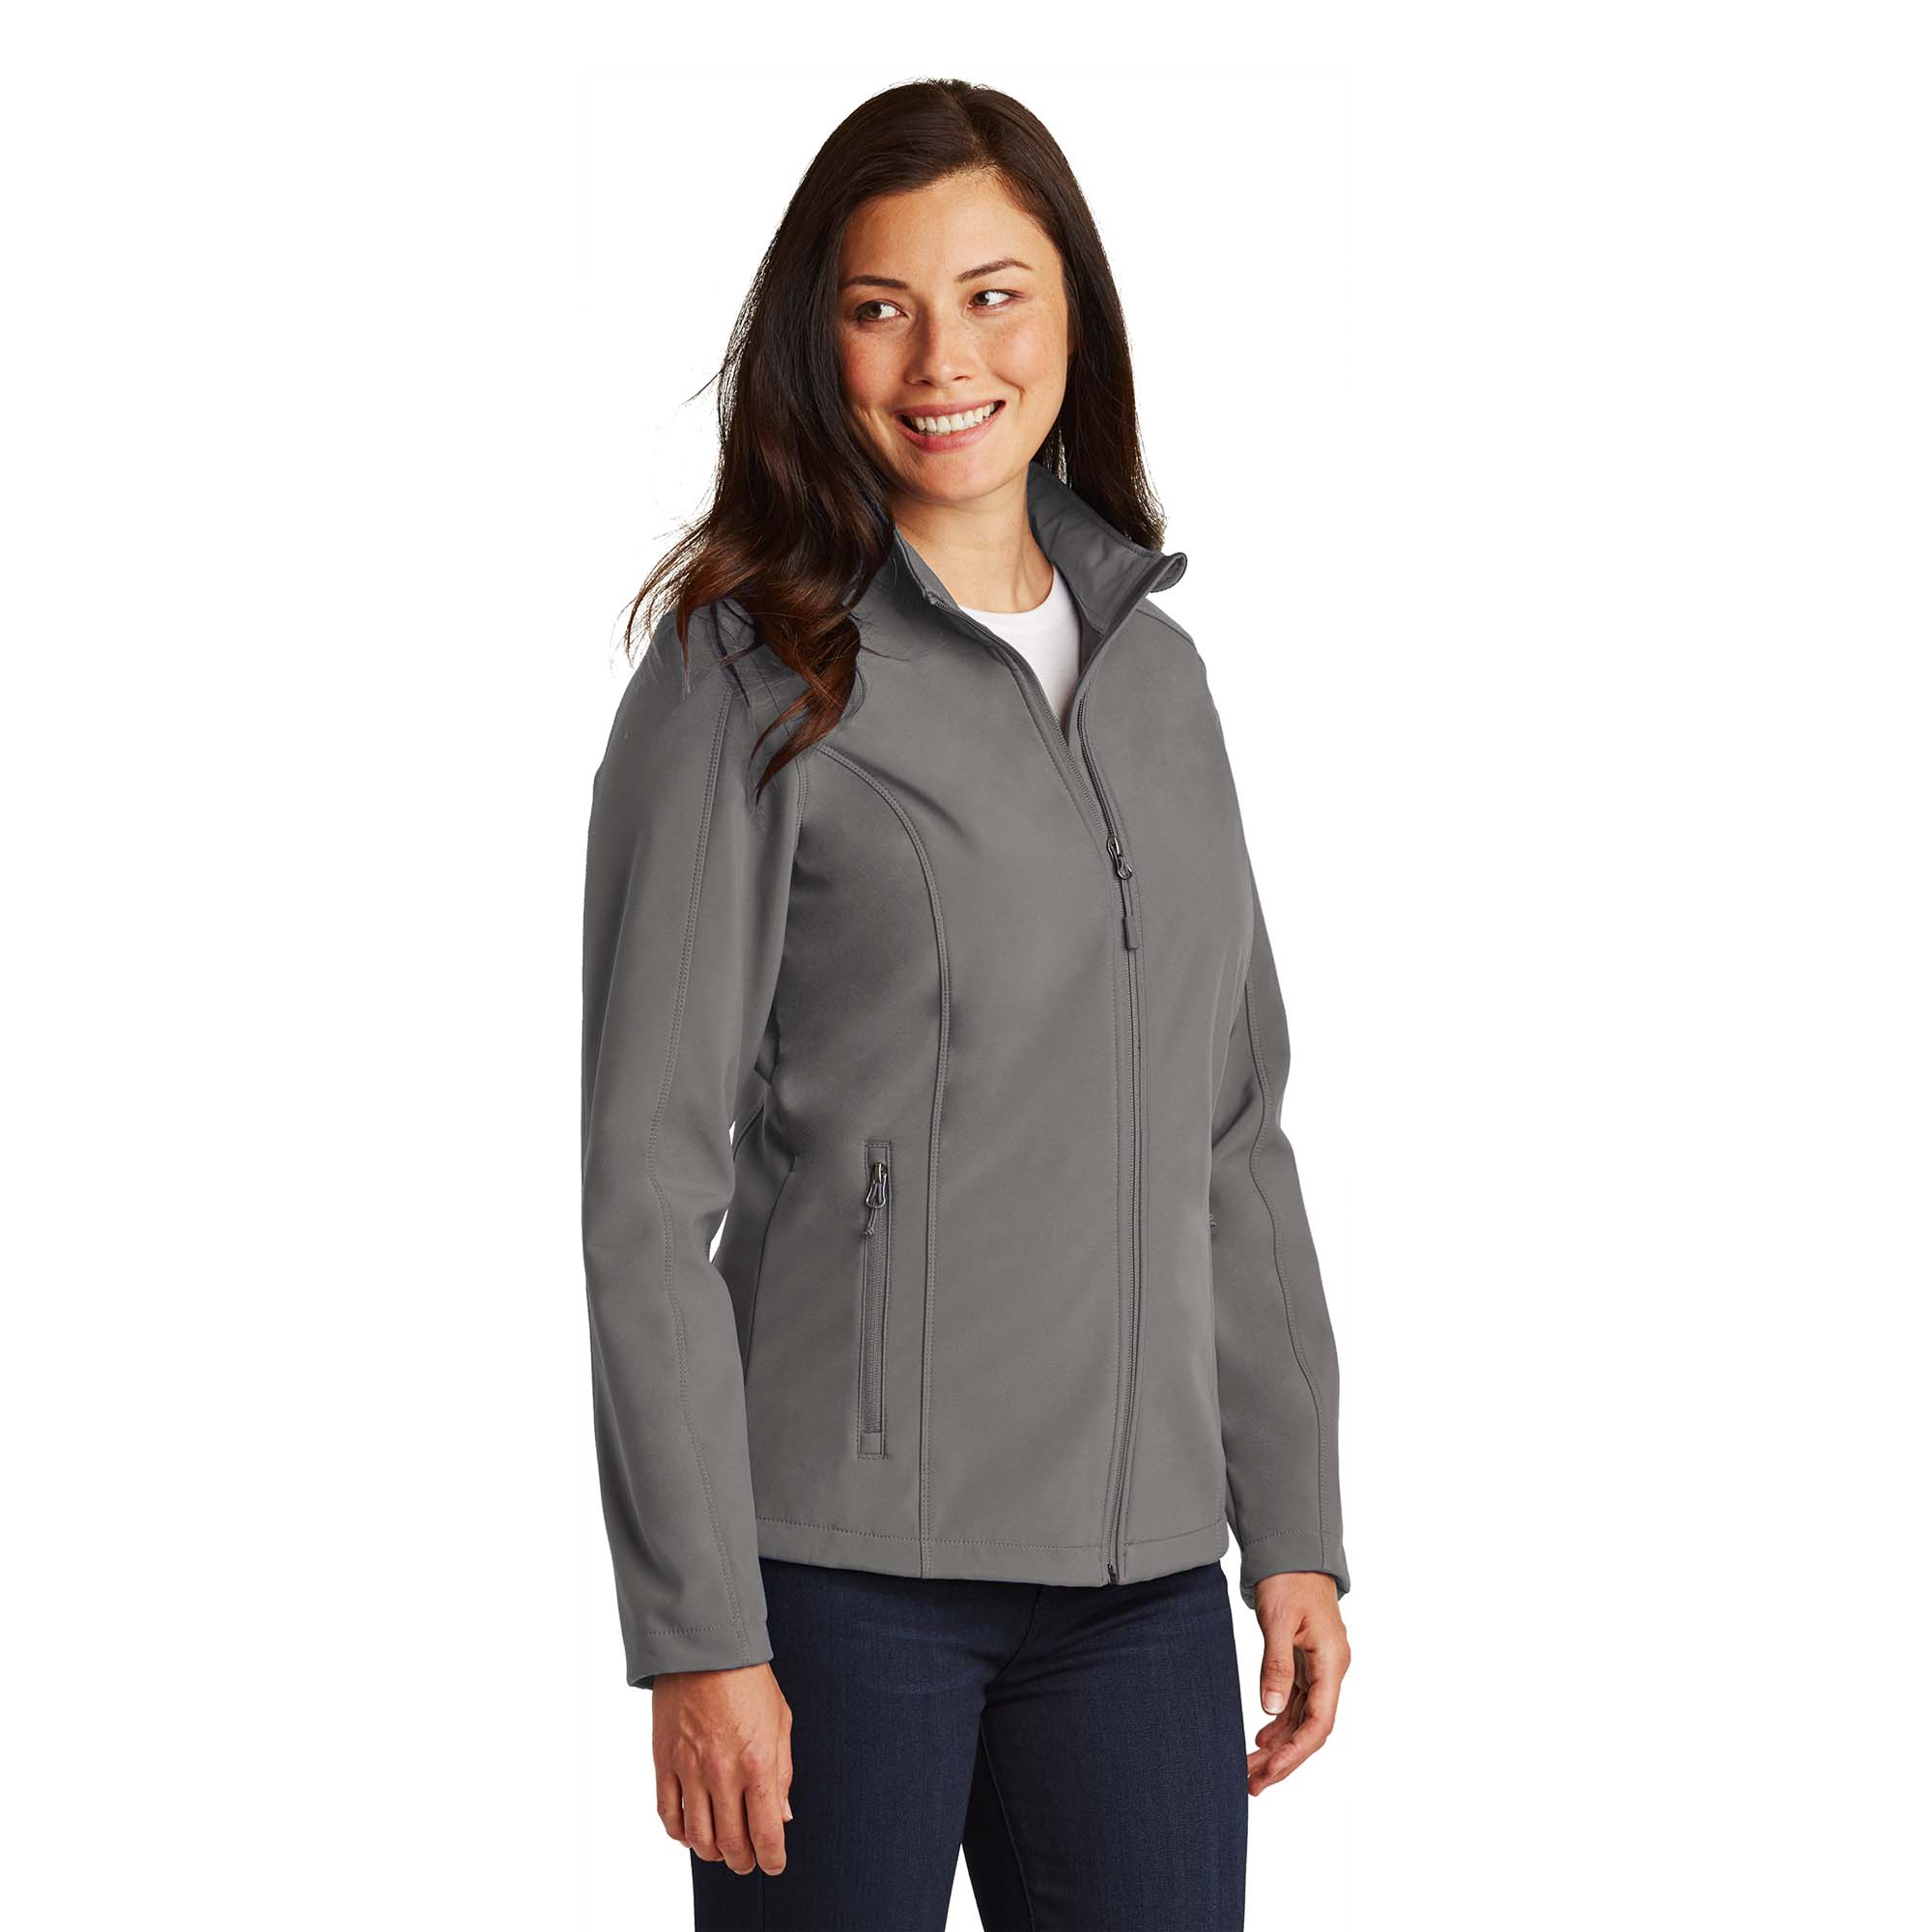 L216 SALE Port Authority® Ladies Colorblock Value Fleece JacketThe